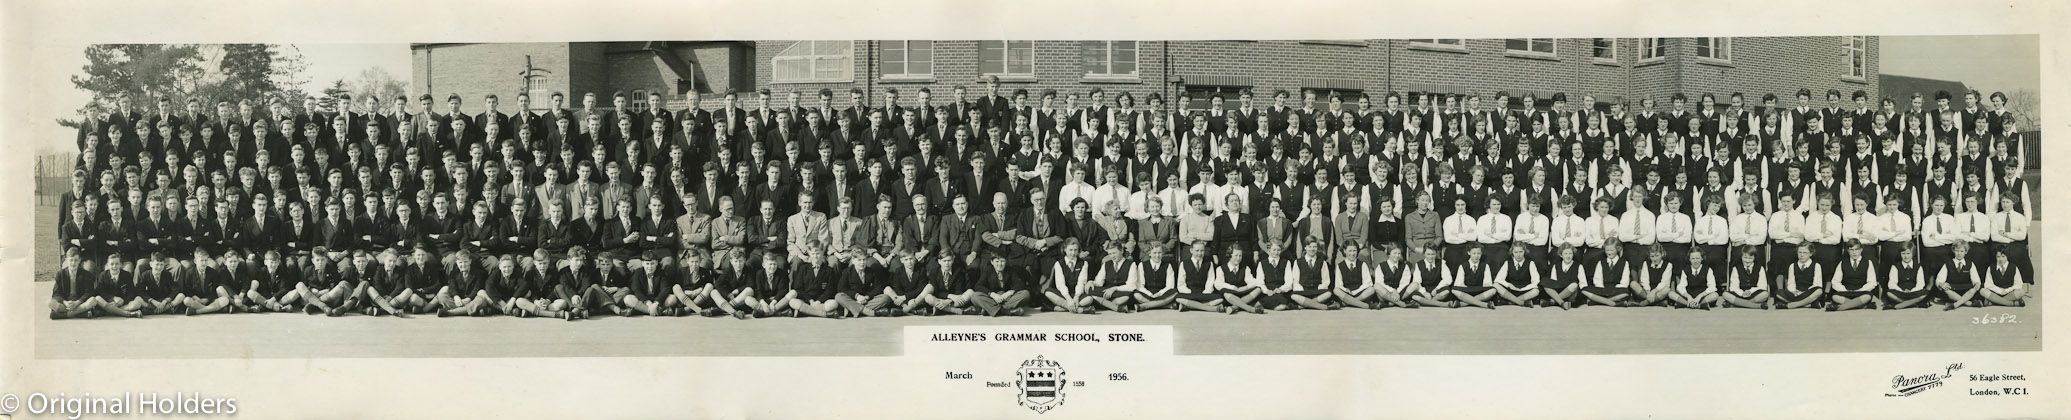 Alleyne's Grammar School - March 1956